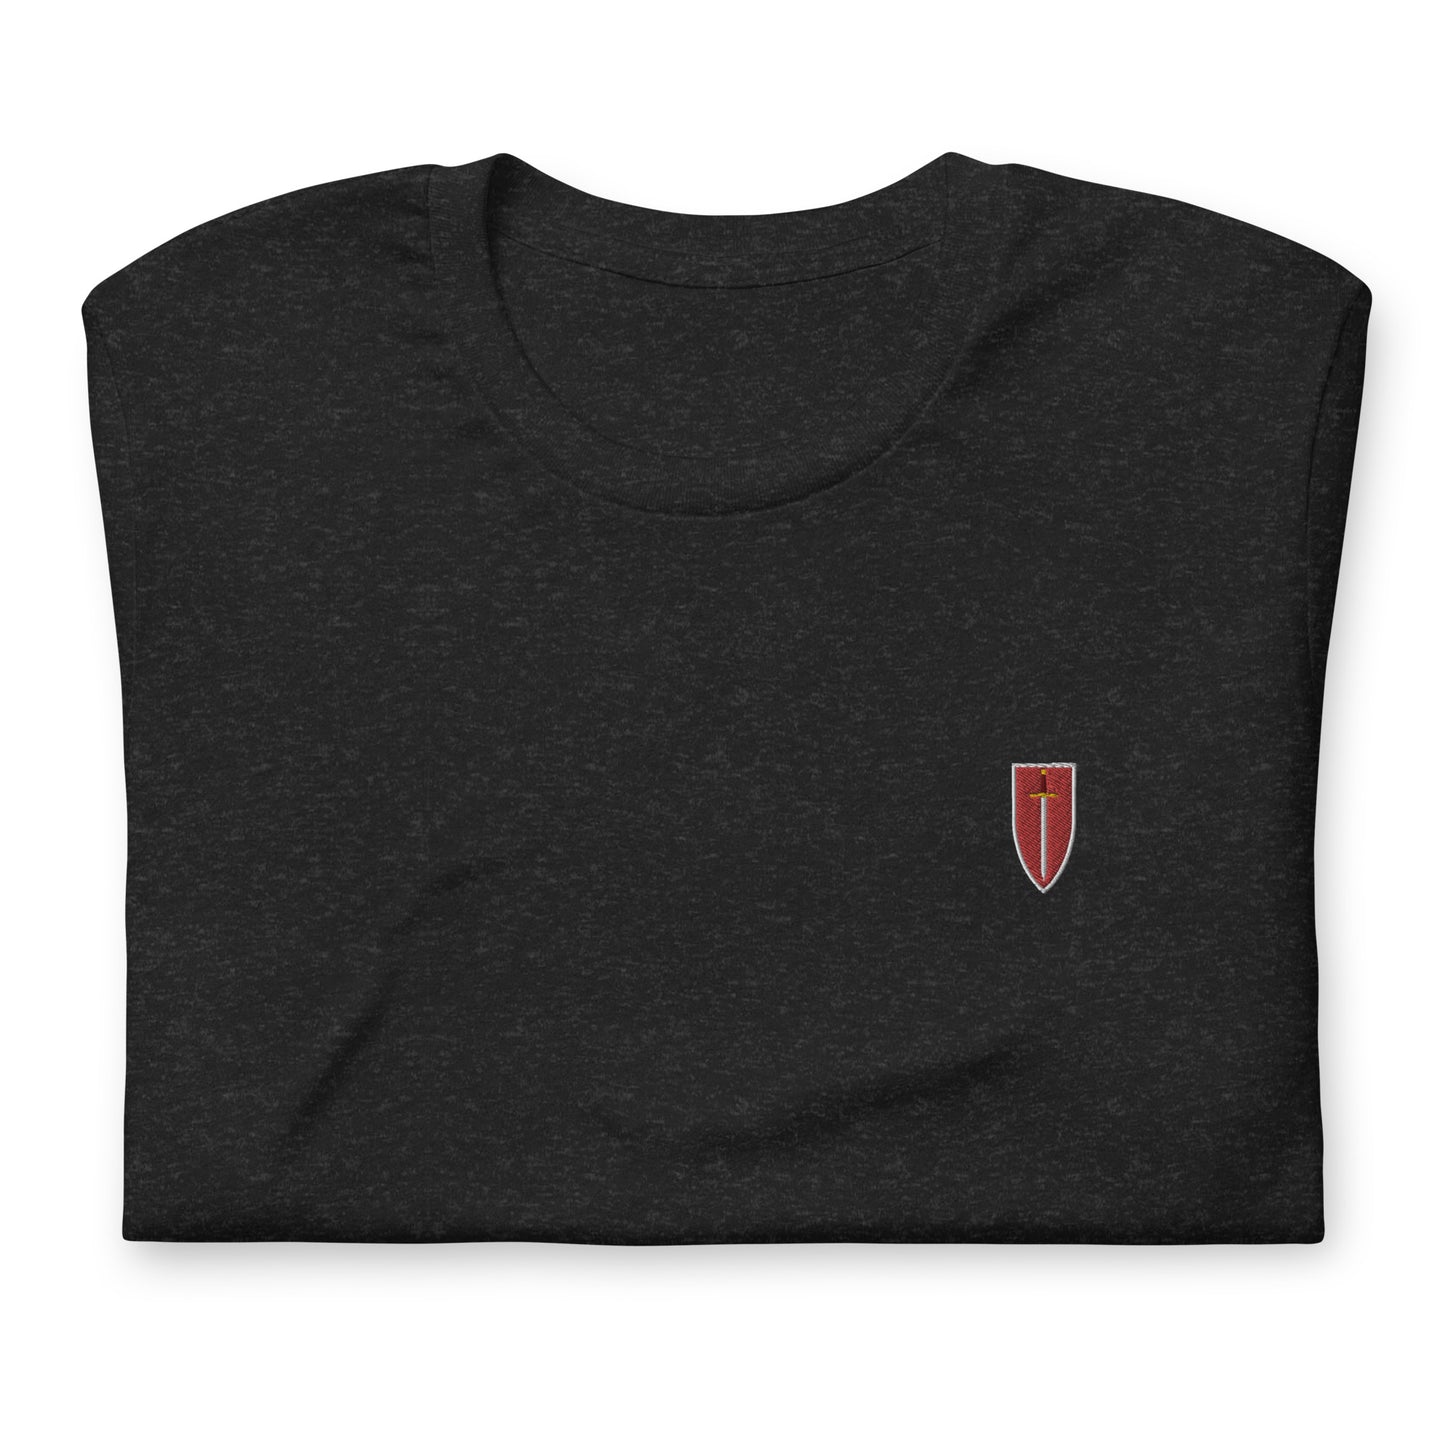 Corinite Sword and Shield, Embroidered - Sigil Attire - Unisex T-shirt